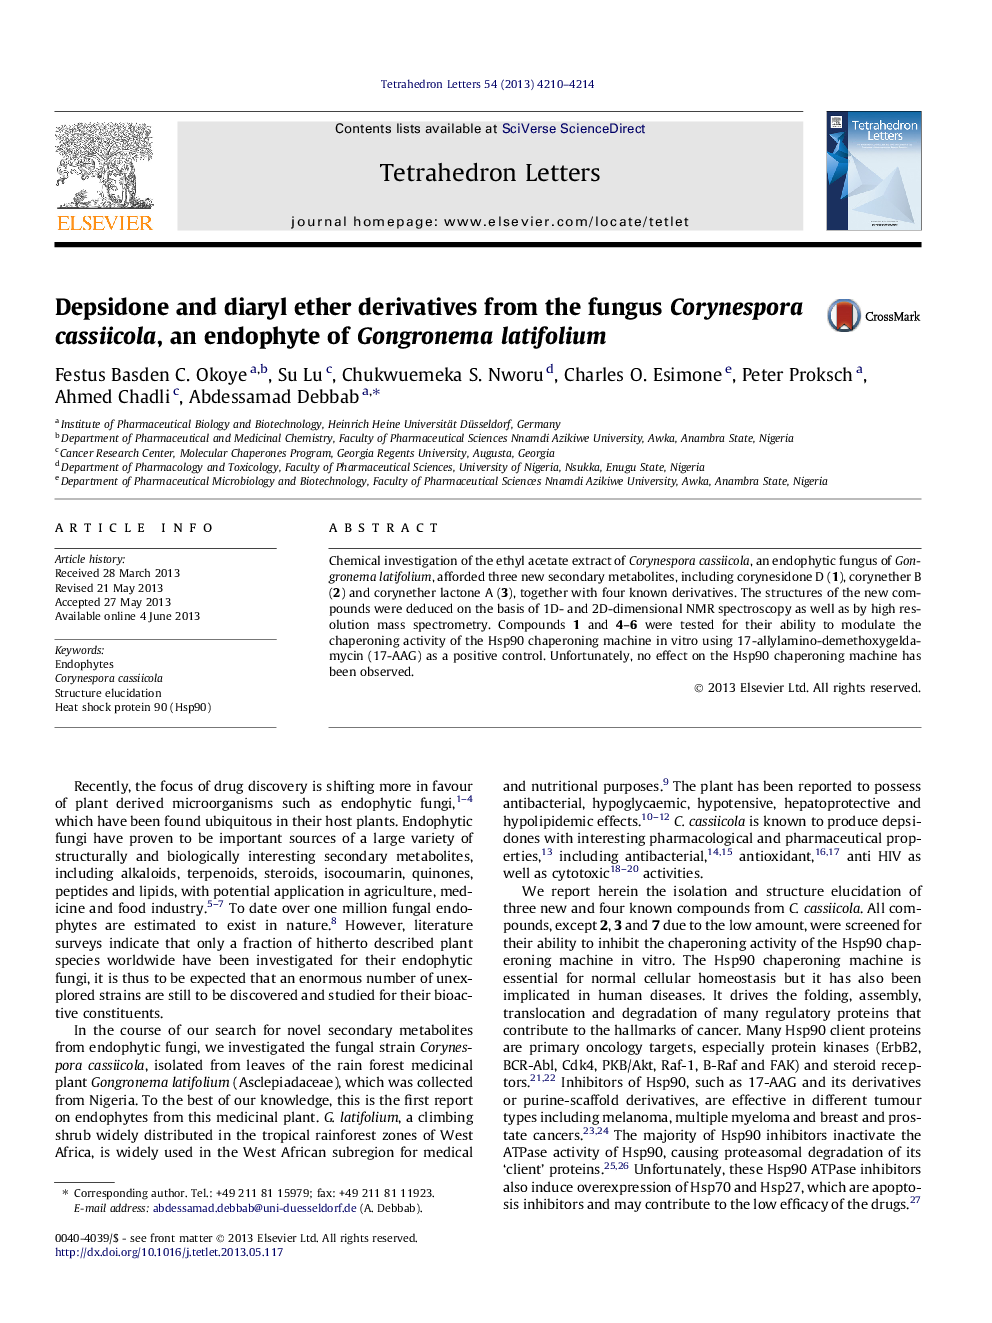 Depsidone and diaryl ether derivatives from the fungus Corynespora cassiicola, an endophyte of Gongronema latifolium